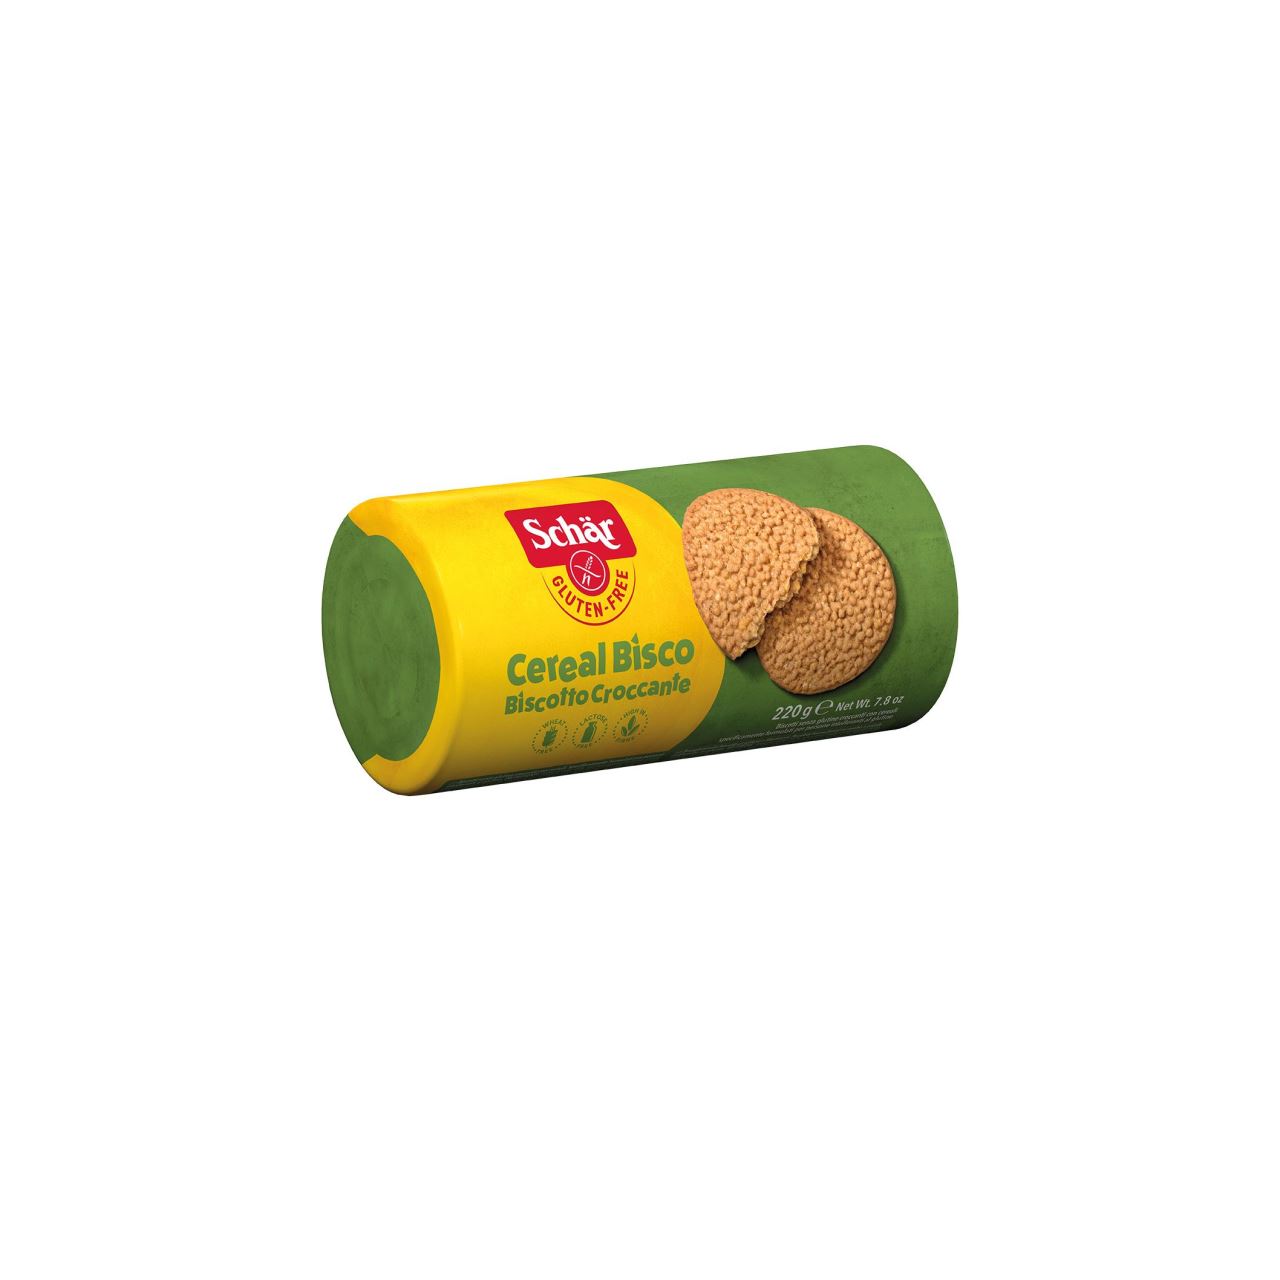 Biscuiti crocanti fara gluten Cereal Bisco 220gr Schar